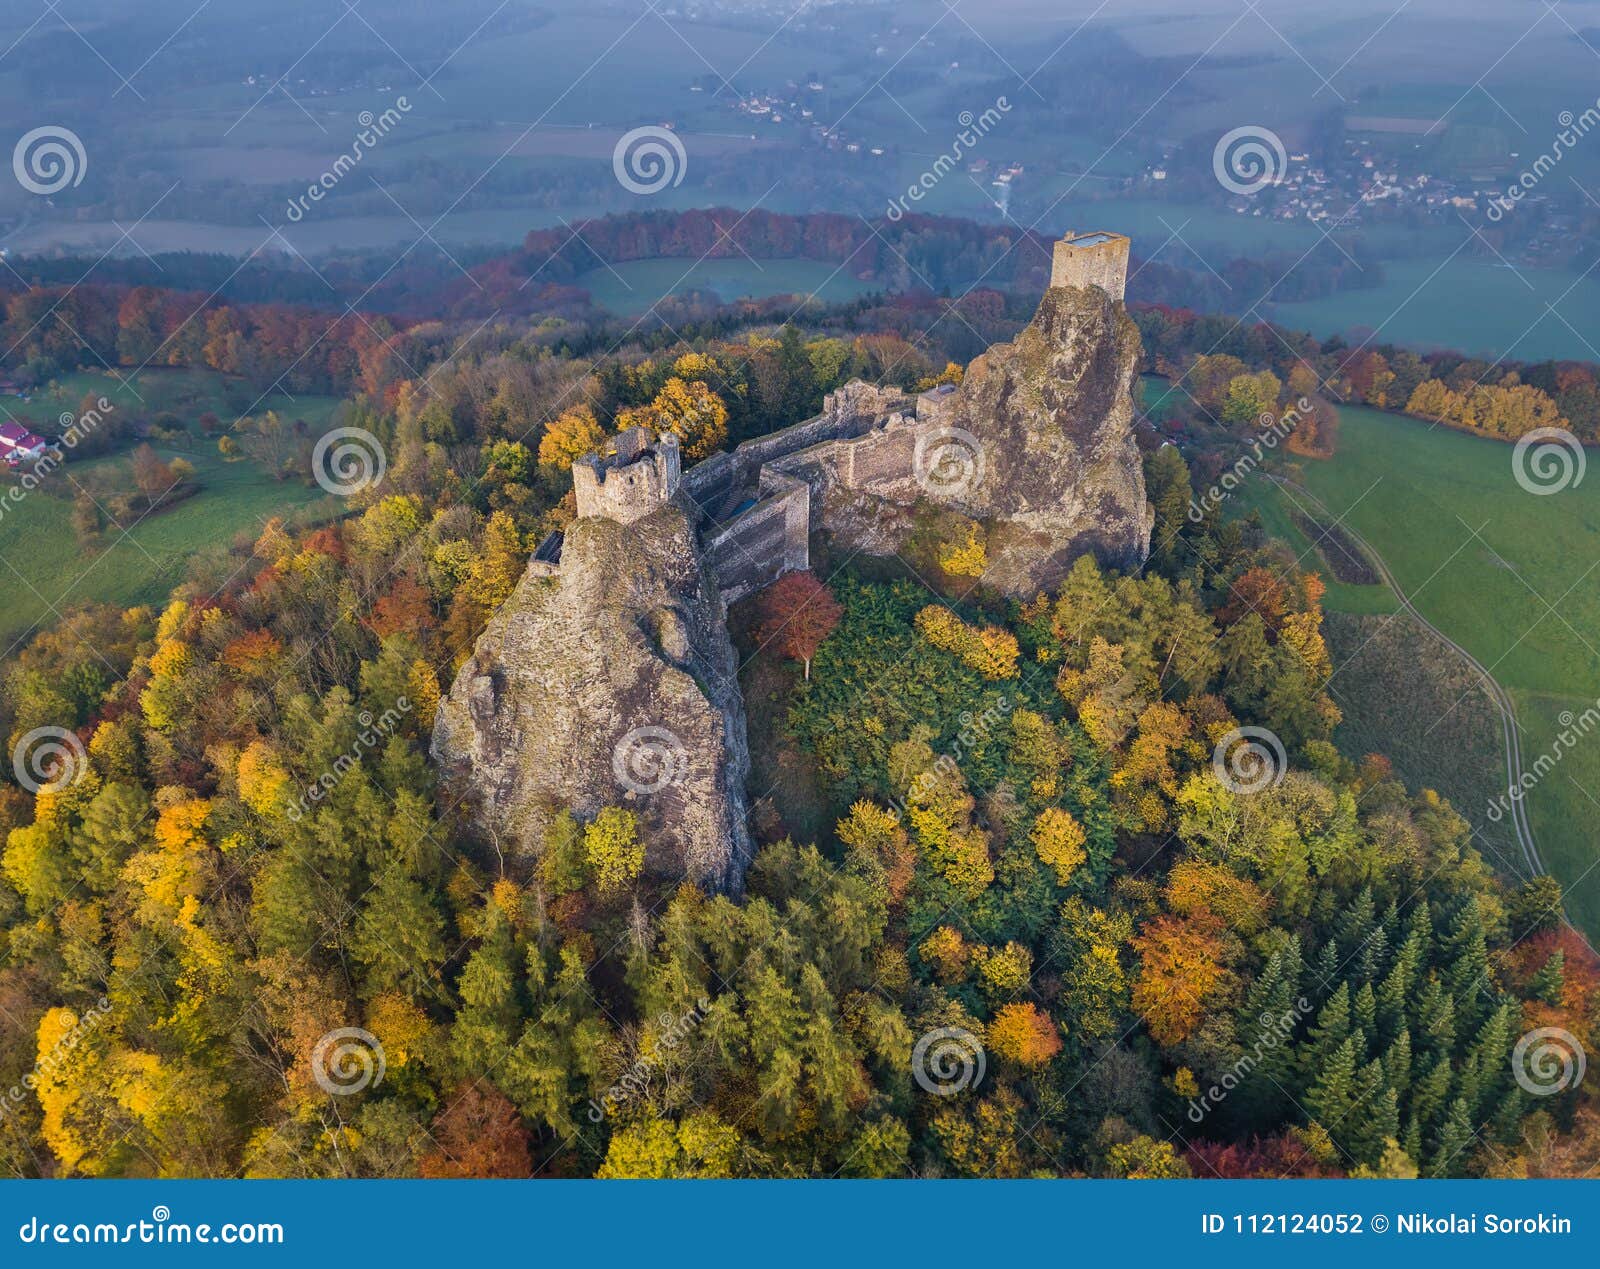 trosky castle in bohemia paradise - czech republic - aerial view